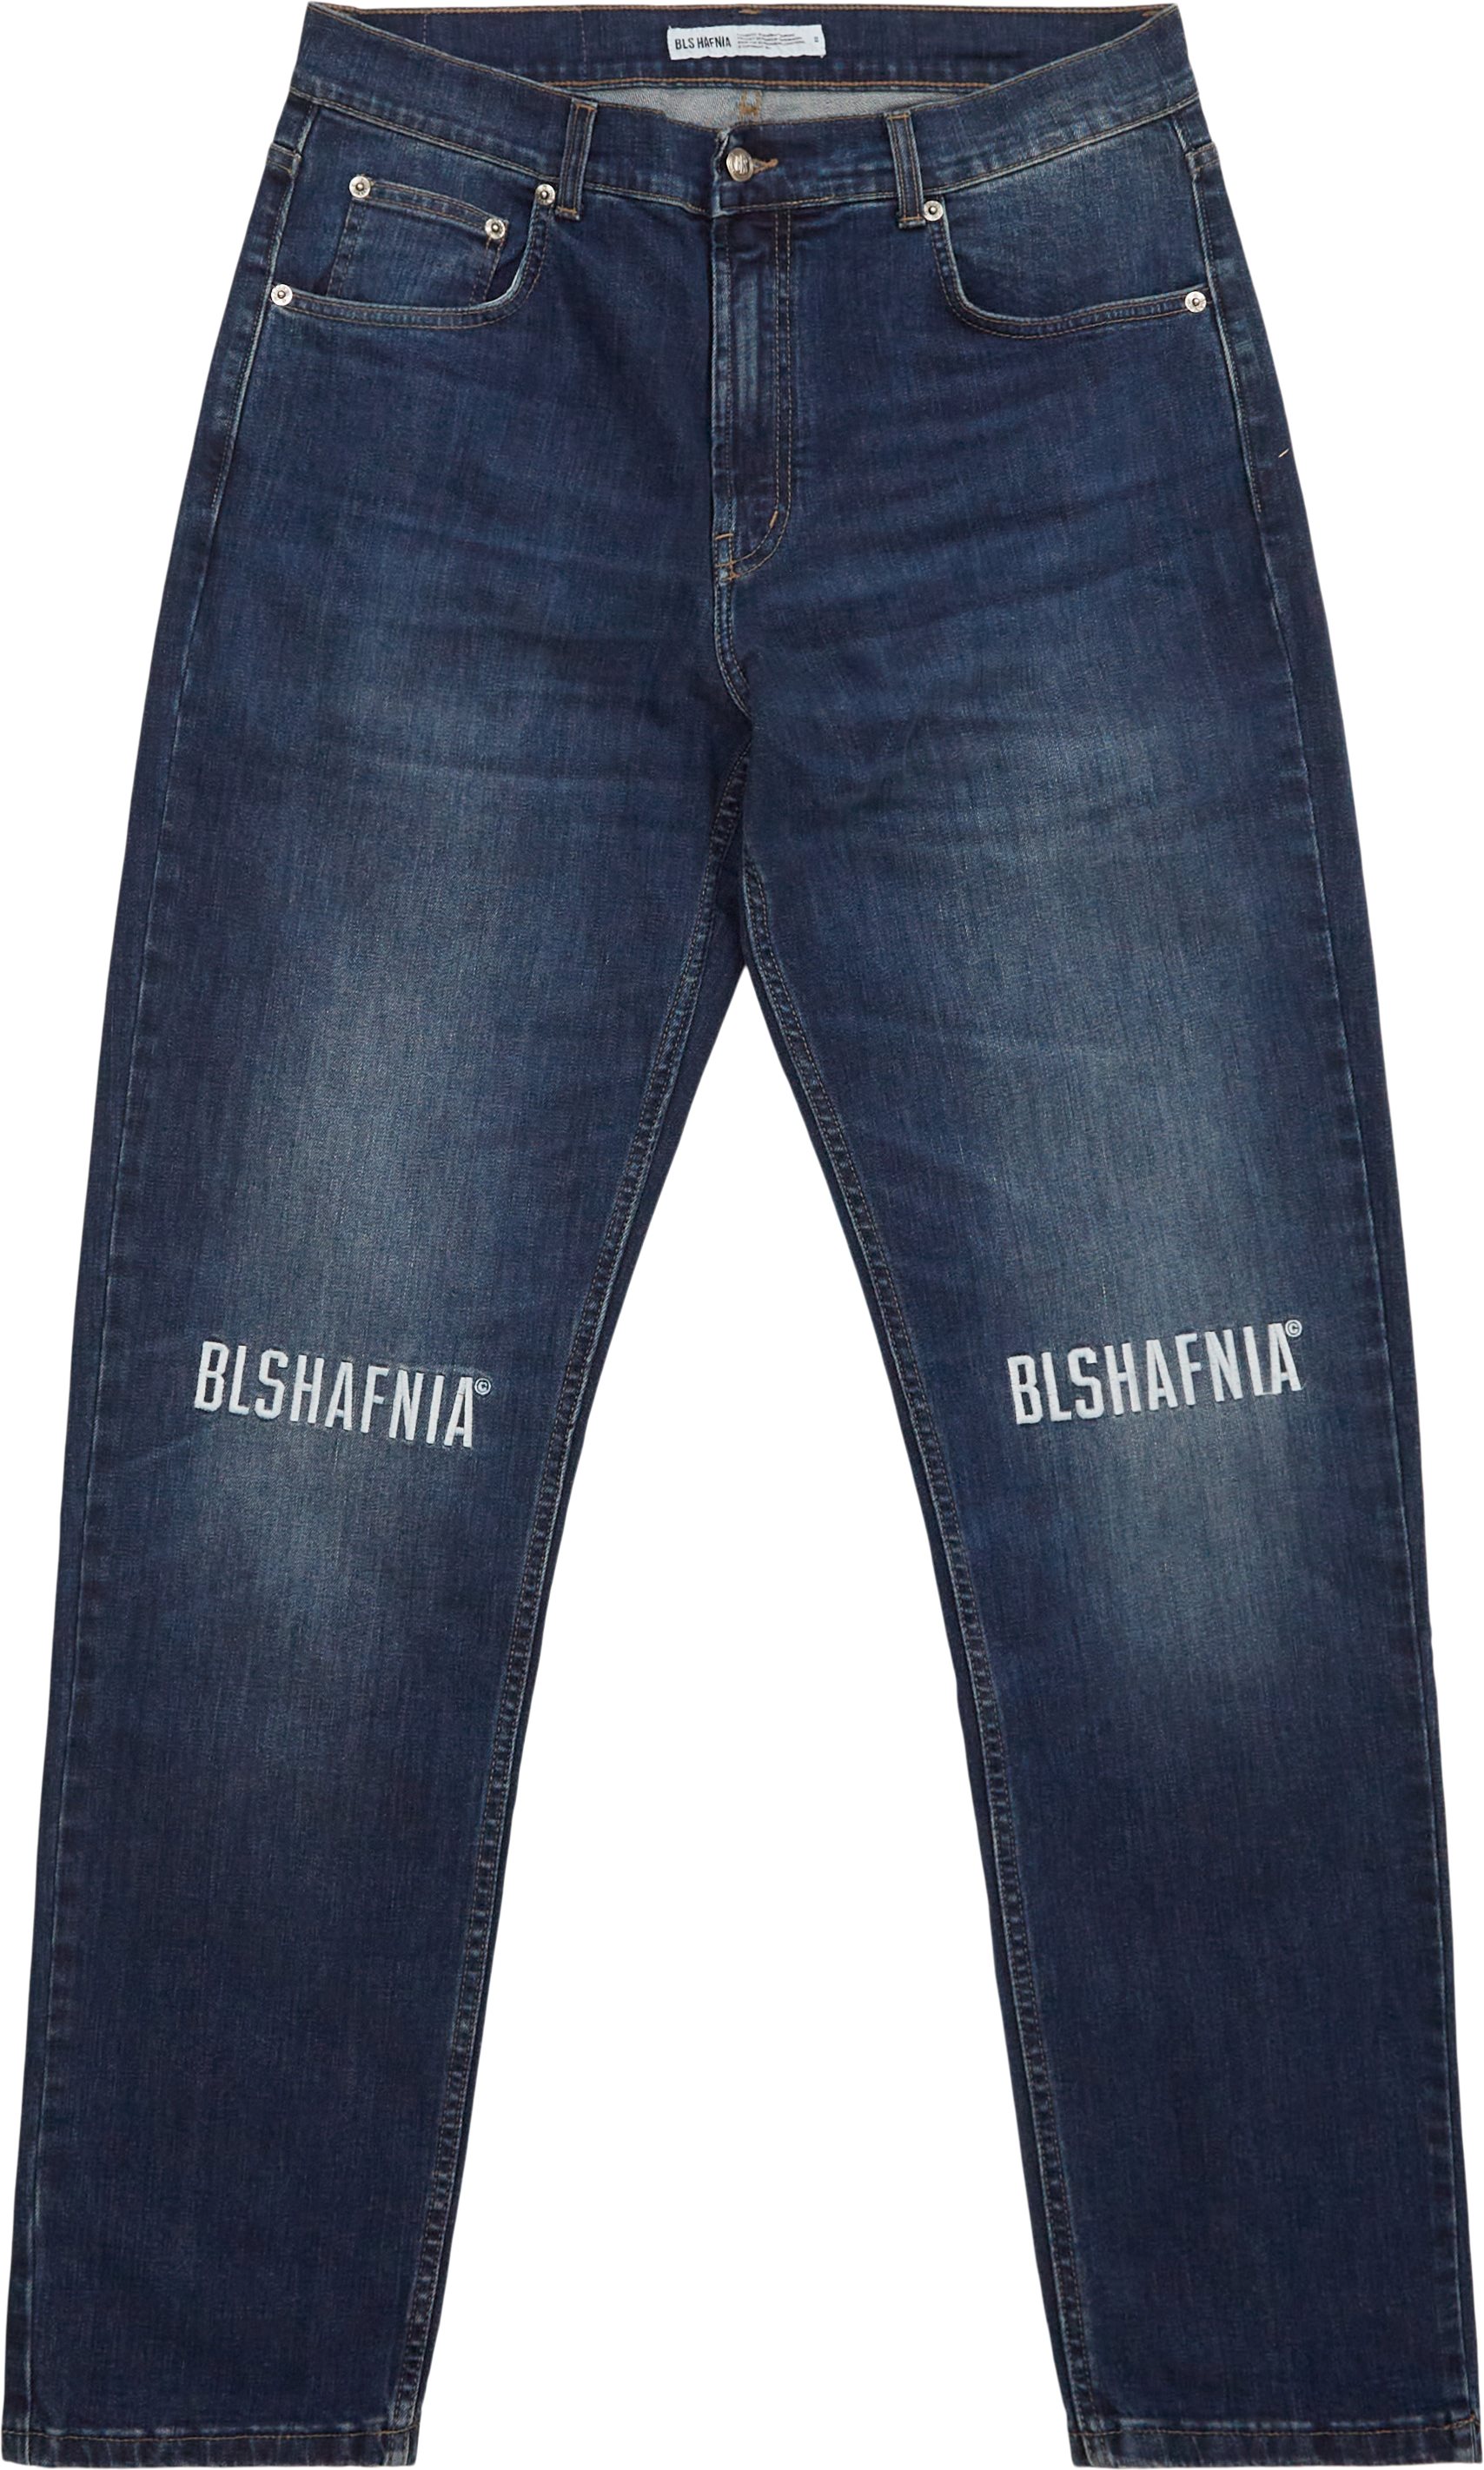 BLS Jeans TYPO LOGO EMB JEANS 202308024 Blue